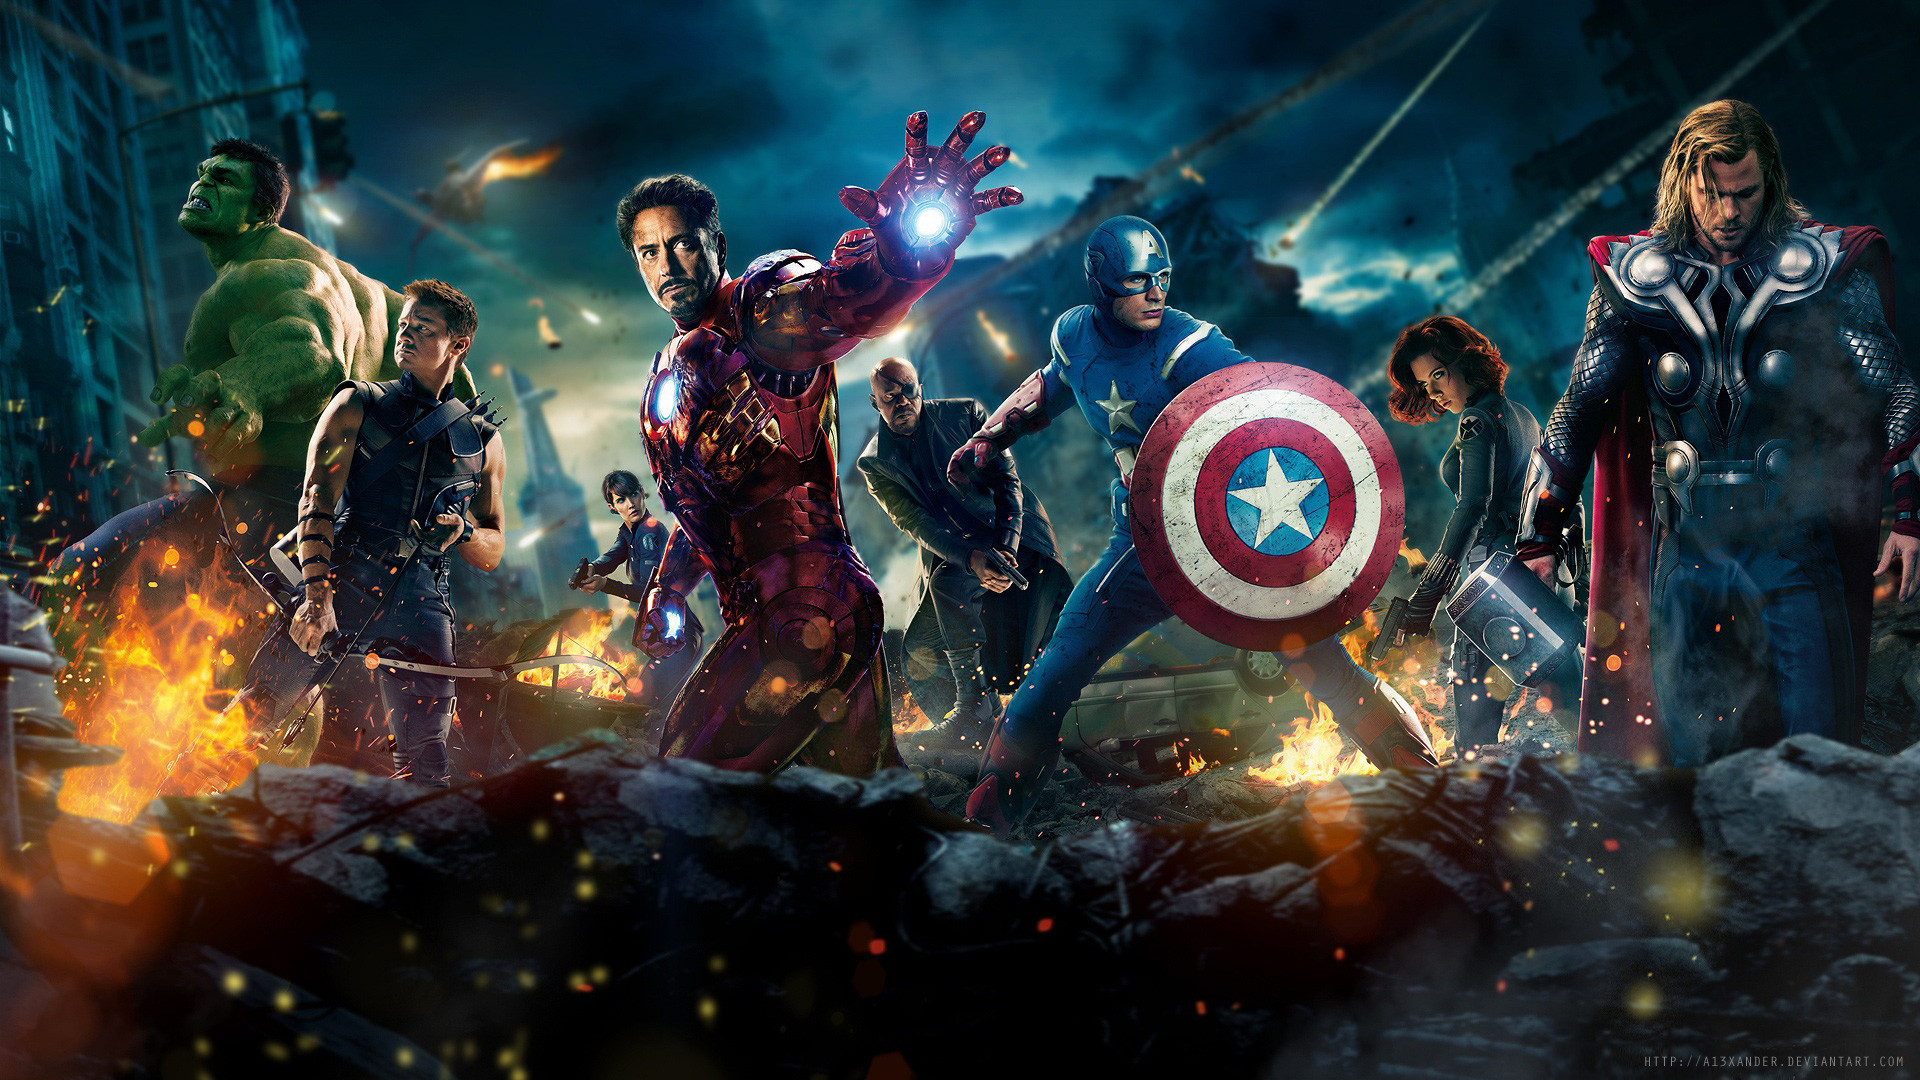 Avengers Full HD Wallpapers, download 1080p desktop backgrounds